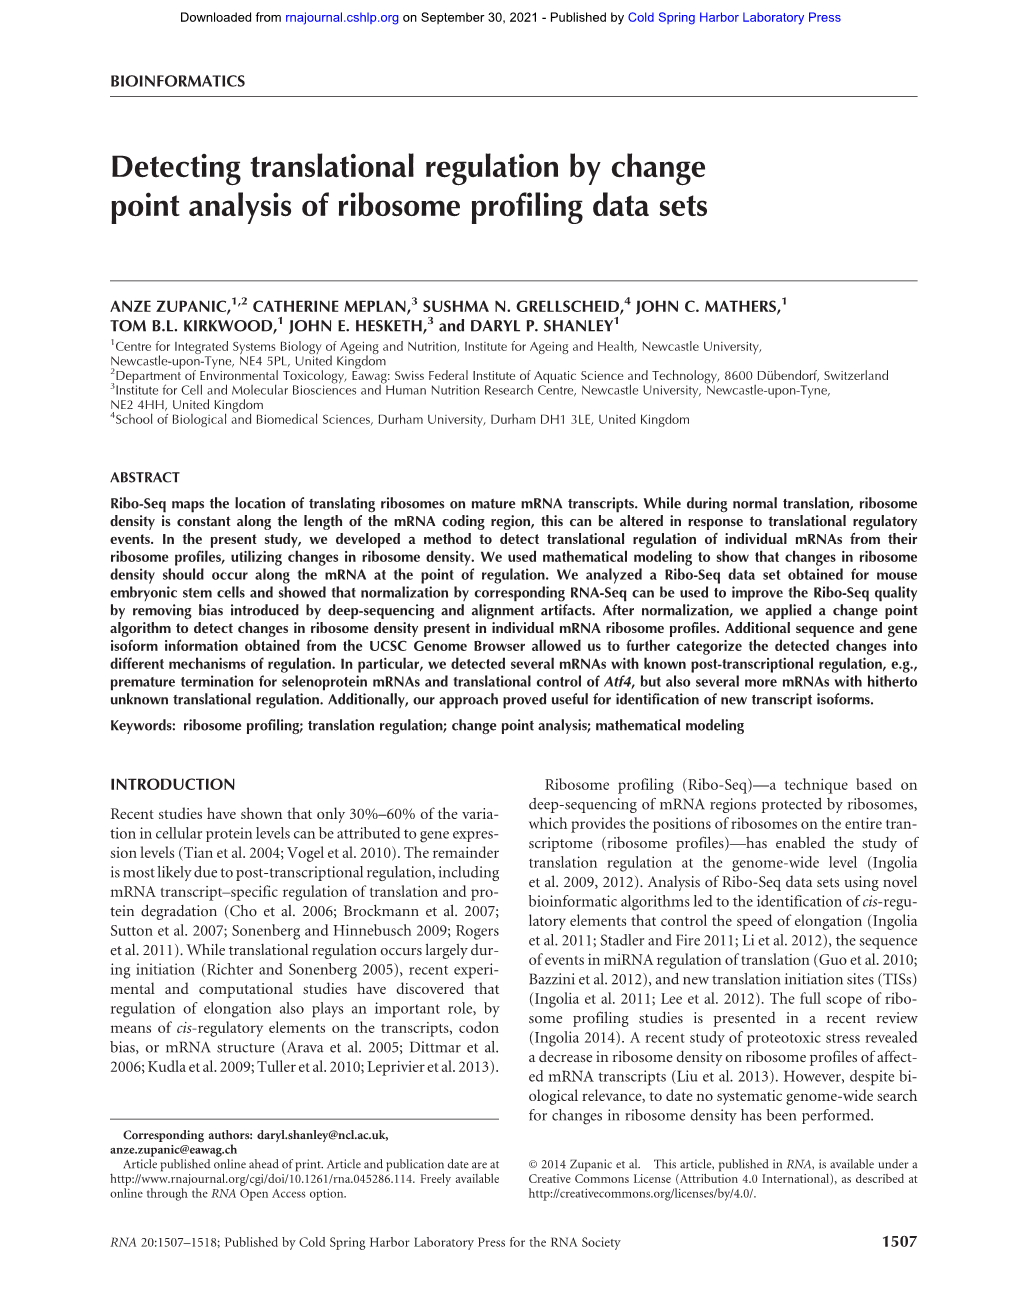 Detecting Translational Regulation by Change Point Analysis of Ribosome Profiling Data Sets